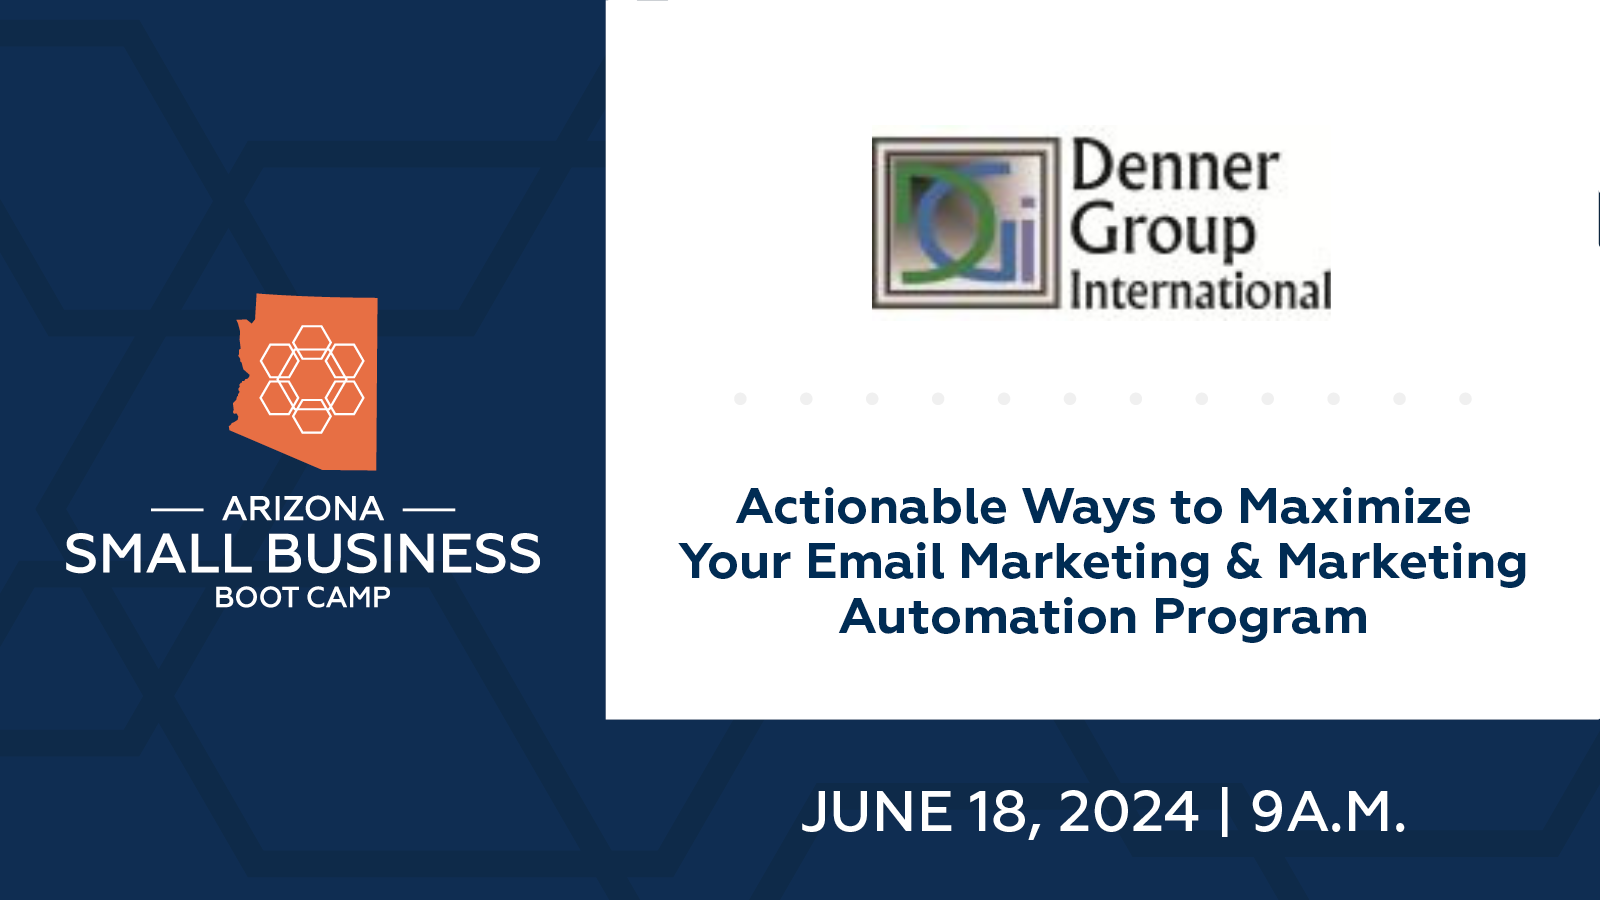 Actionable Ways to Maximize Your Email Marketing & Marketing Automation Program